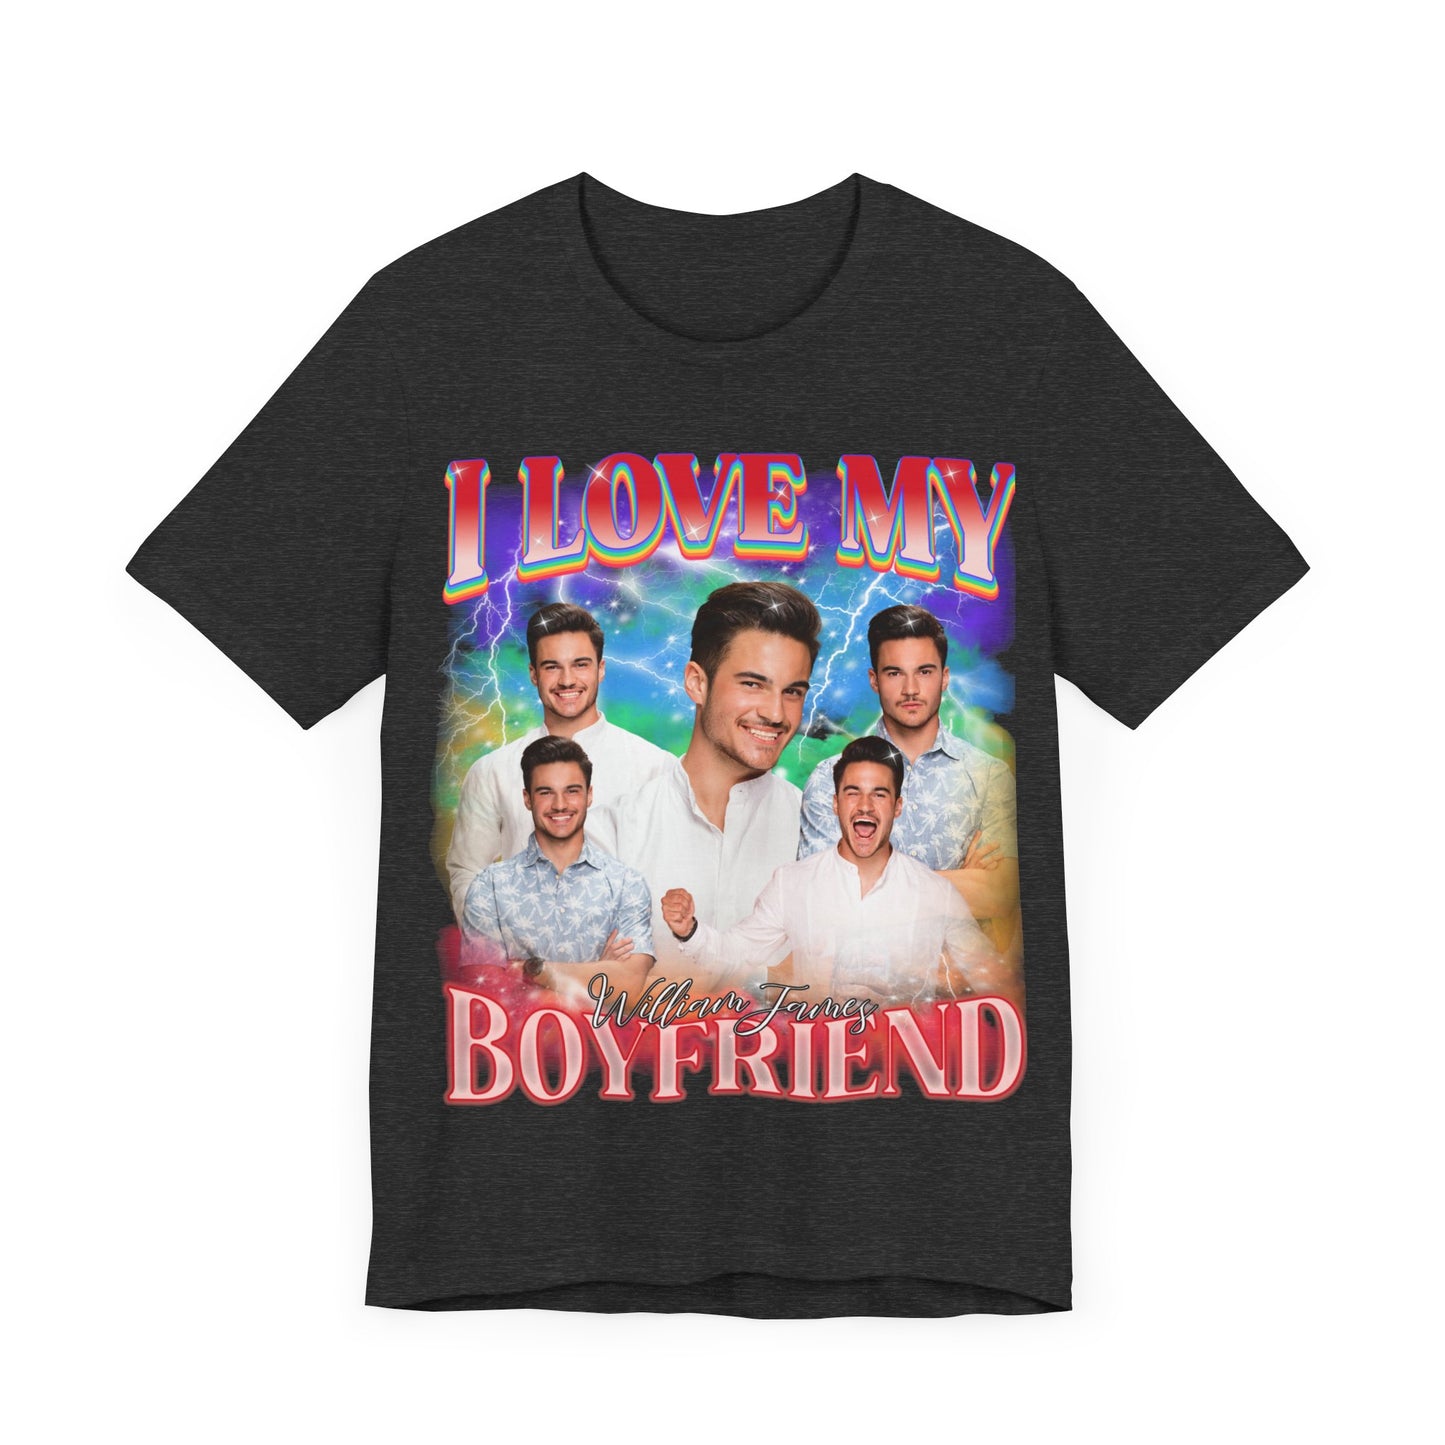 I Love My Boyfriend LGBTQIA+ Pride Shirt, Custom Bootleg Rap Tee Gay Rights Gift Equality Shirt LGBTQ Supporter Shirt Rainbow Shirt, T1632